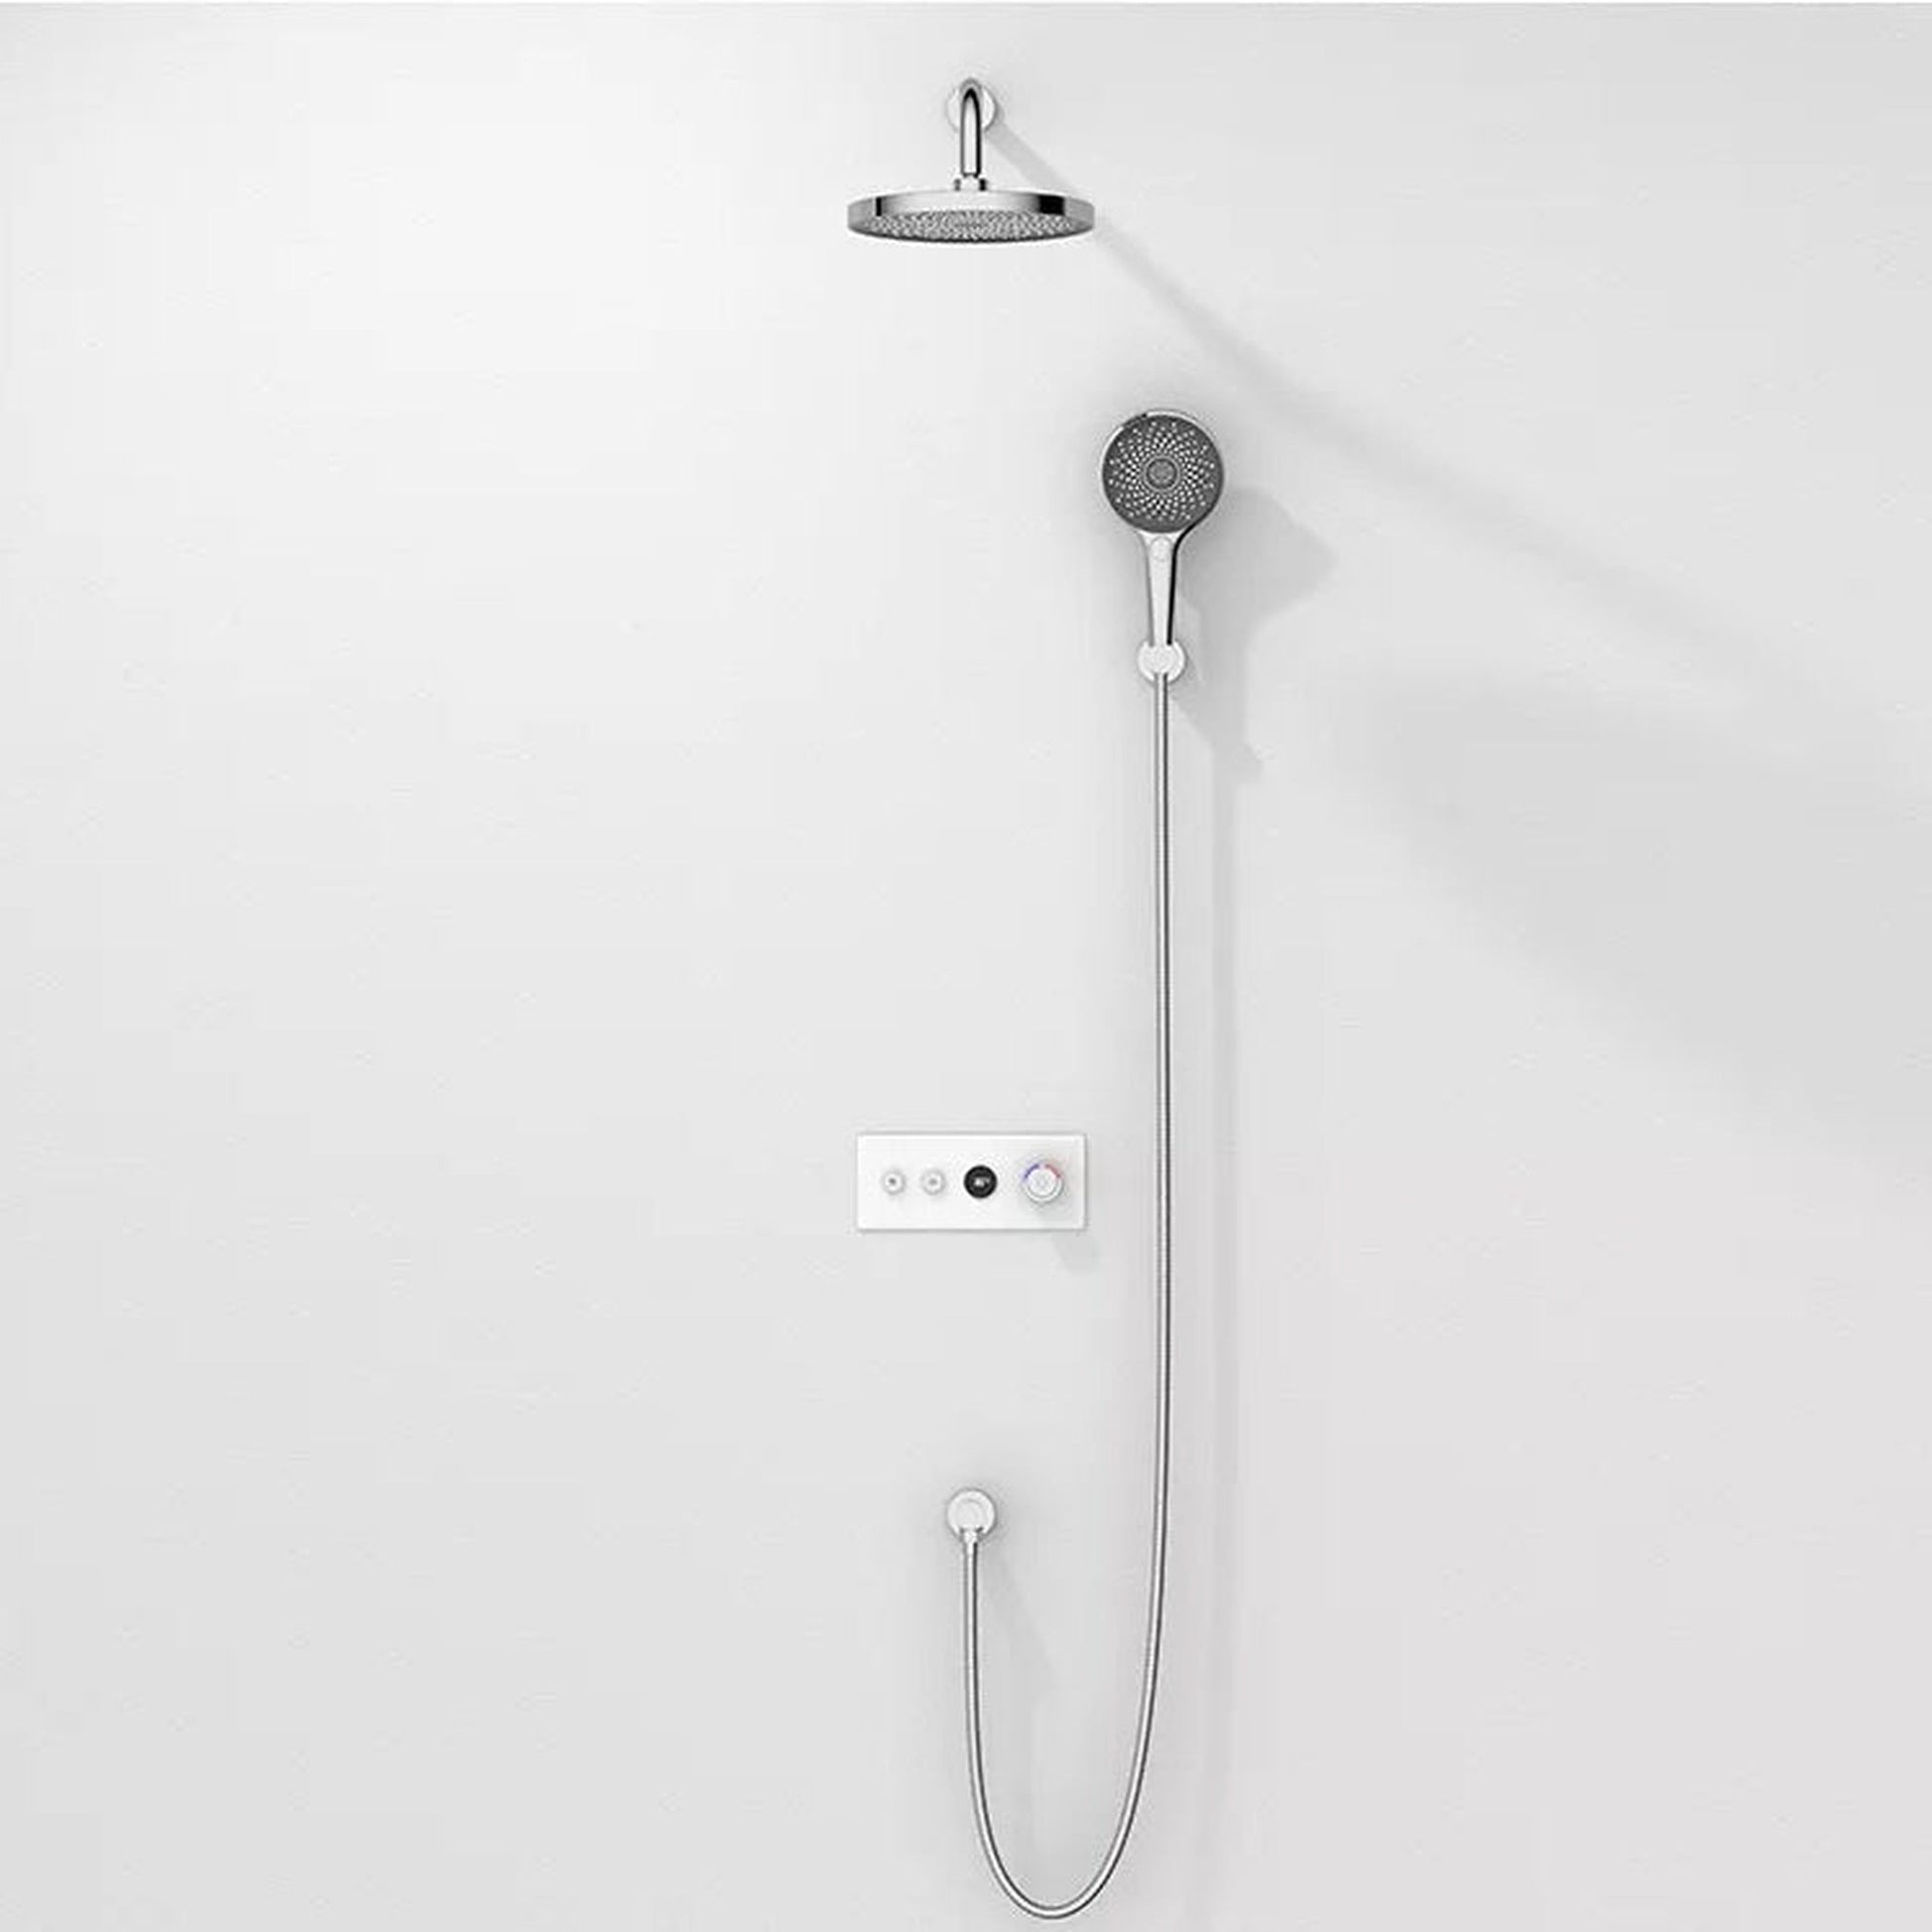 Fontana Rimini Creative Luxury Chrome Round Wall-Mounted Digital Mixer Rainfall Shower System With Hand Shower